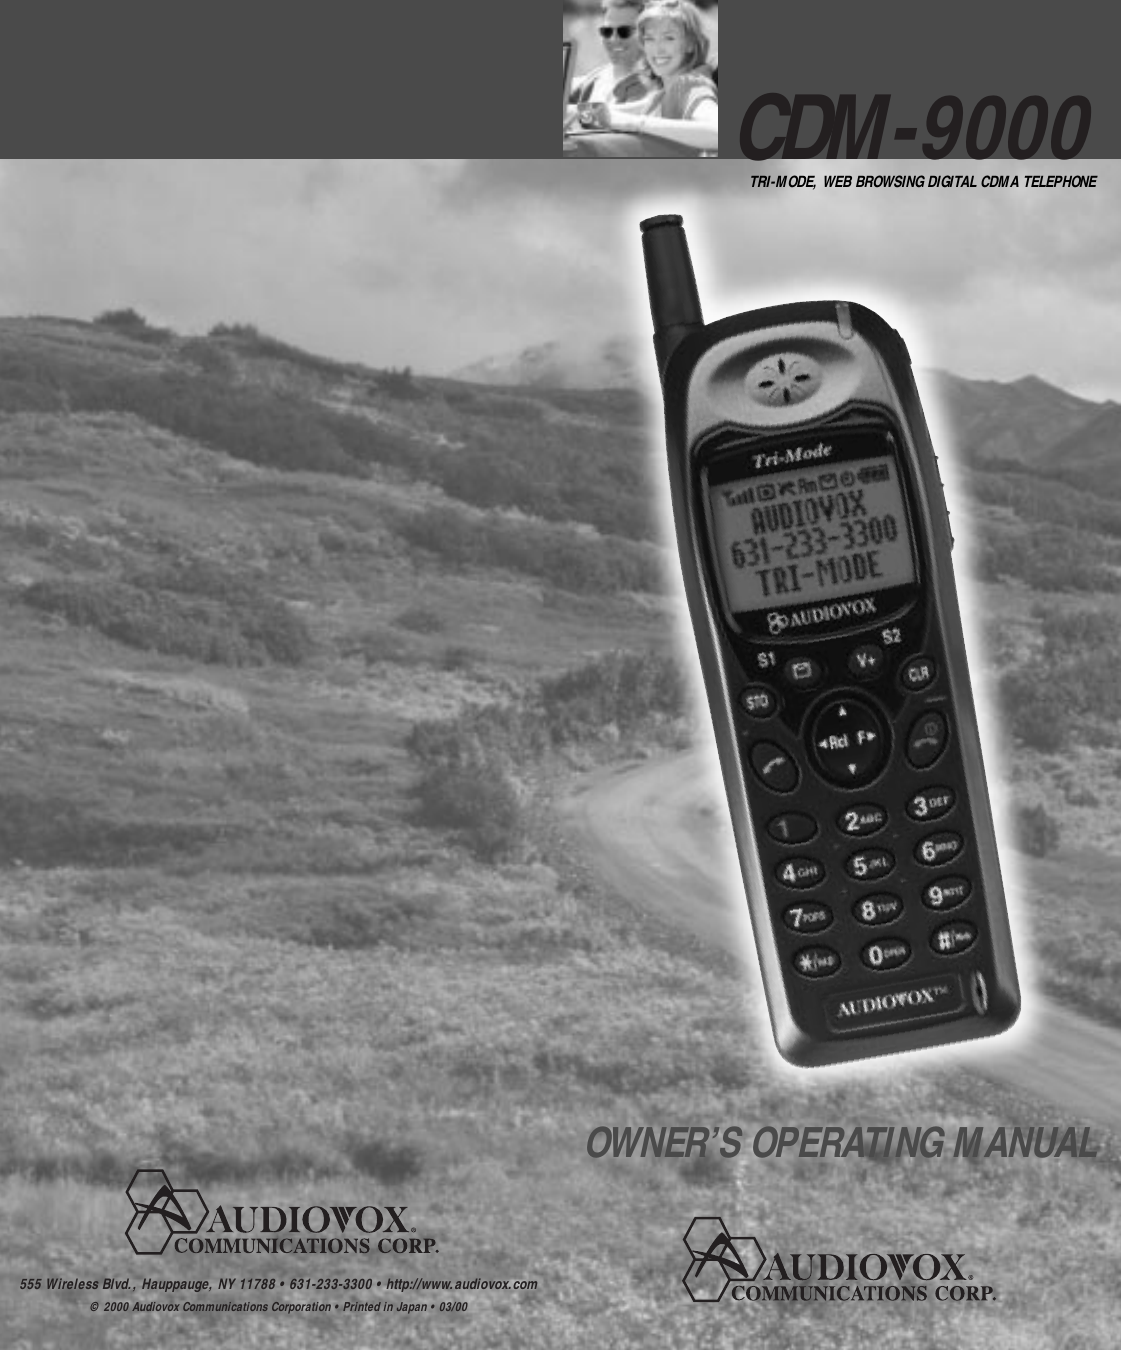 CDM-9000TRI-MODE, WEB BROWSING DIGITAL CDMA TELEPHONEOWNER’S OPERATING MANUAL555 Wireless Blvd., Hauppauge, NY 11788 • 631-233-3300 • http://www.audiovox.com© 2000 Audiovox Communications Corporation • Printed in Japan • 03/00